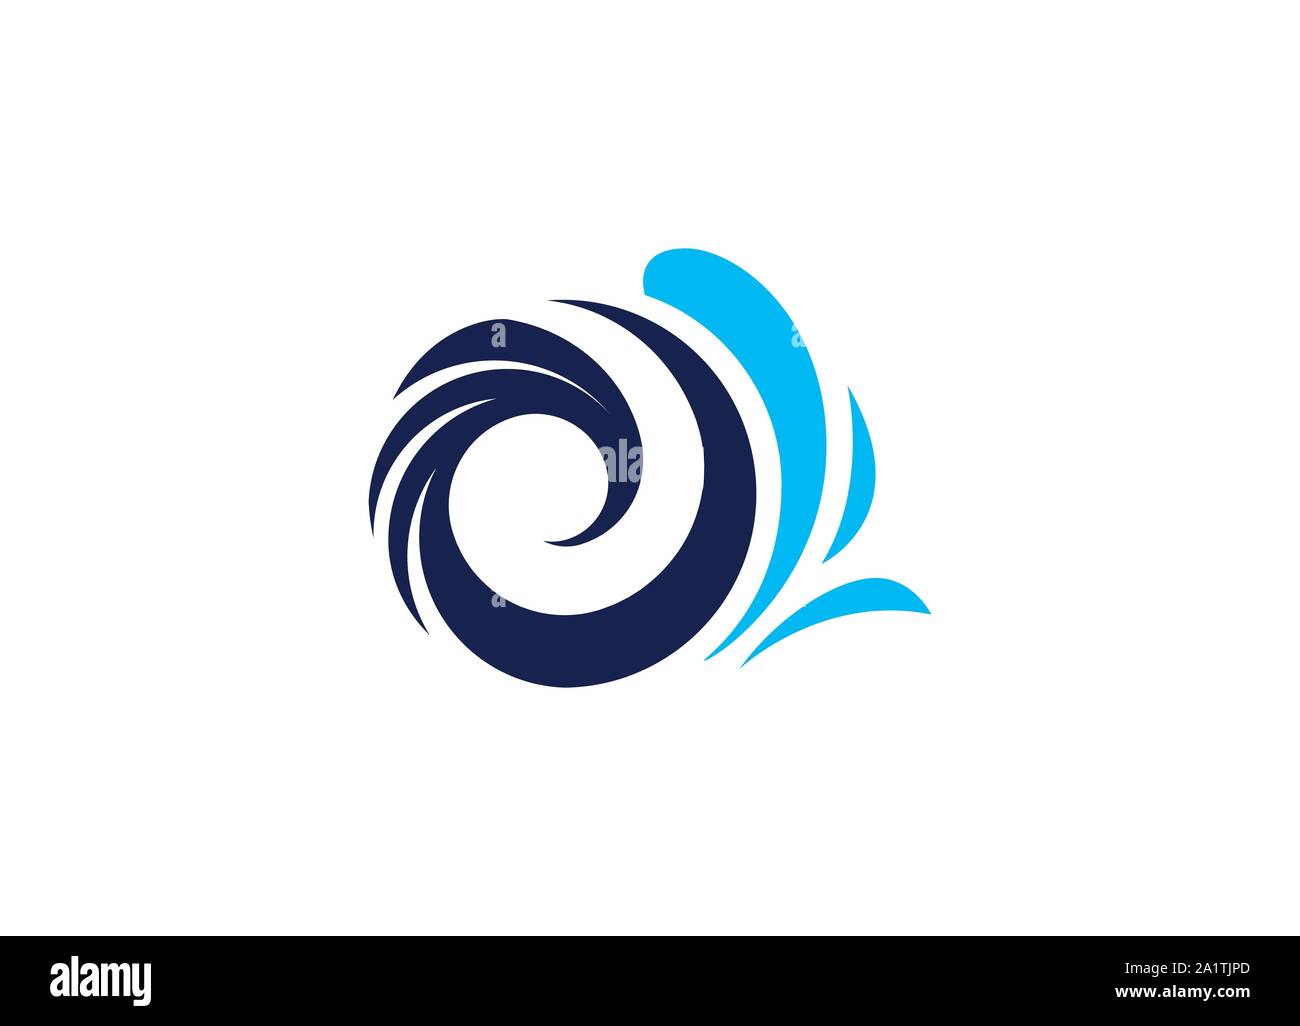 Wave logo Vektor Wasser Meer Ozean fließt Blau download, Wave vector Symbol. Business Icon. Wasser Welle Logo Design vorlage, Wasser, Wasser Welle Stock Vektor